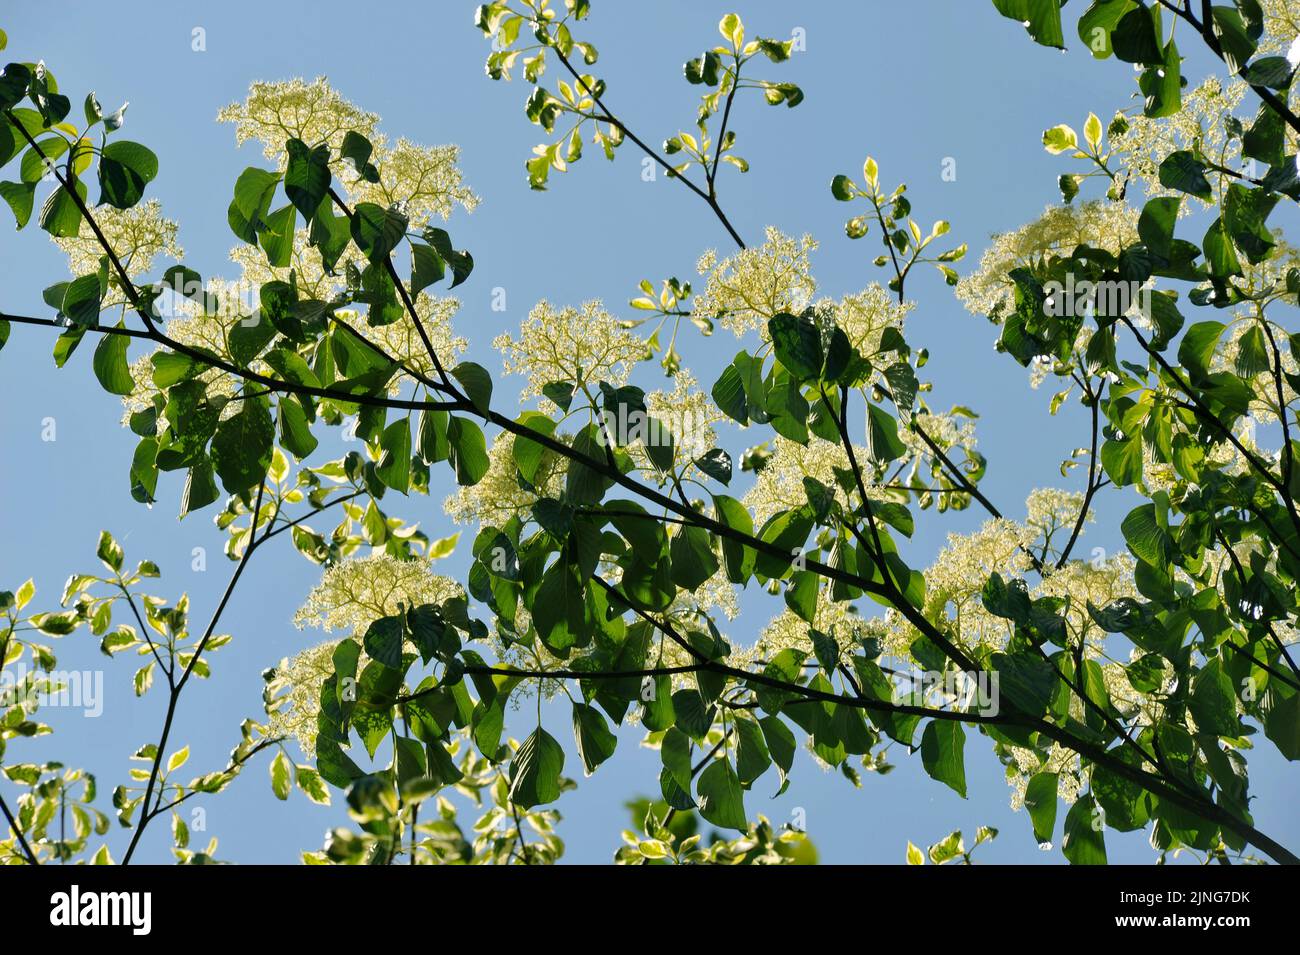 Plant, Wedding cake tree, Cornus controversa variegata. Stock Photo